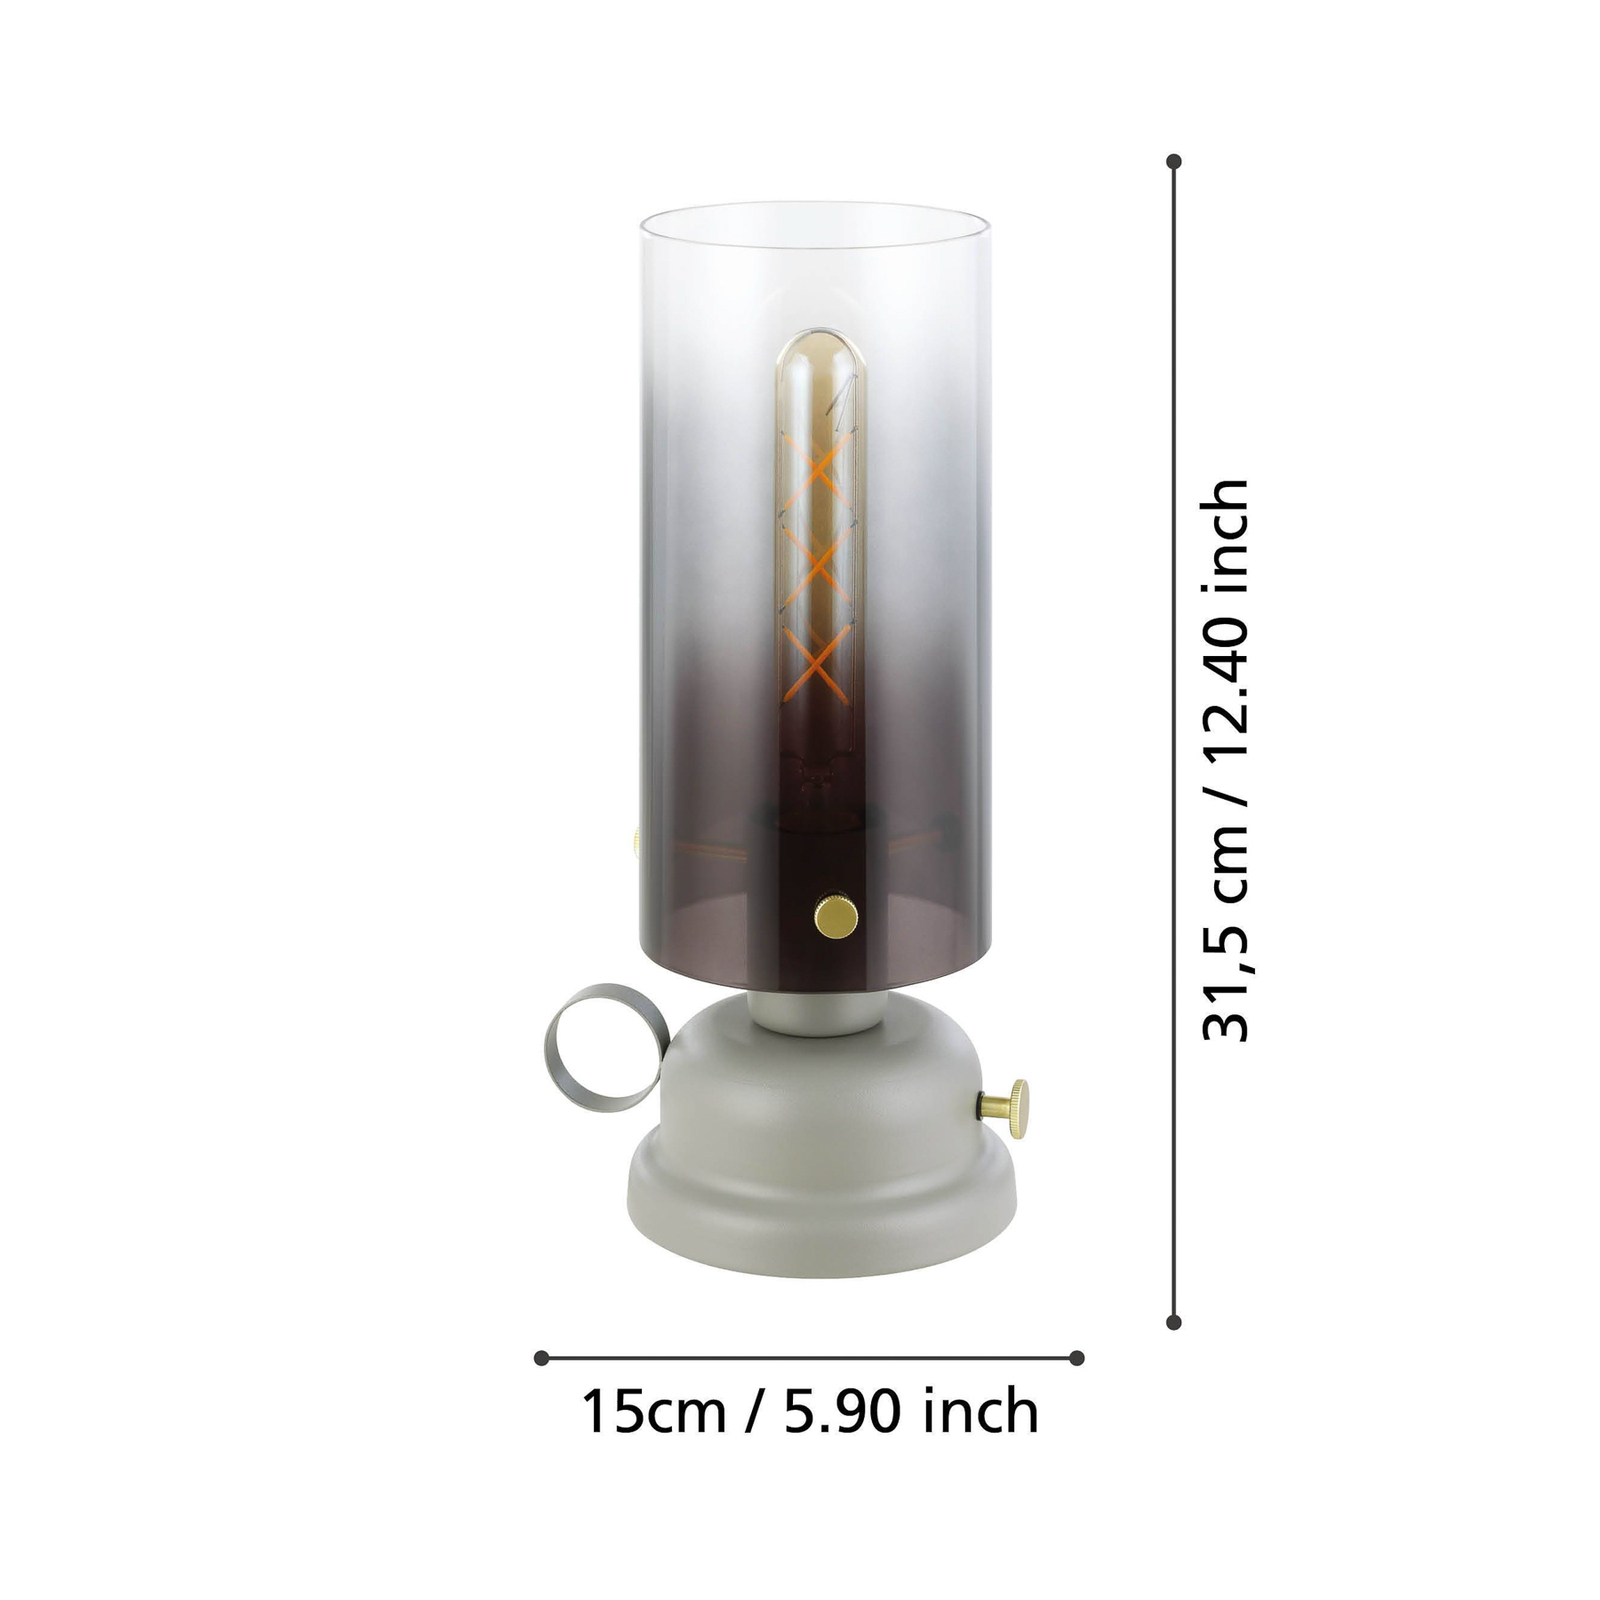 Lampe à poser Gargrave au design de lampe à huile